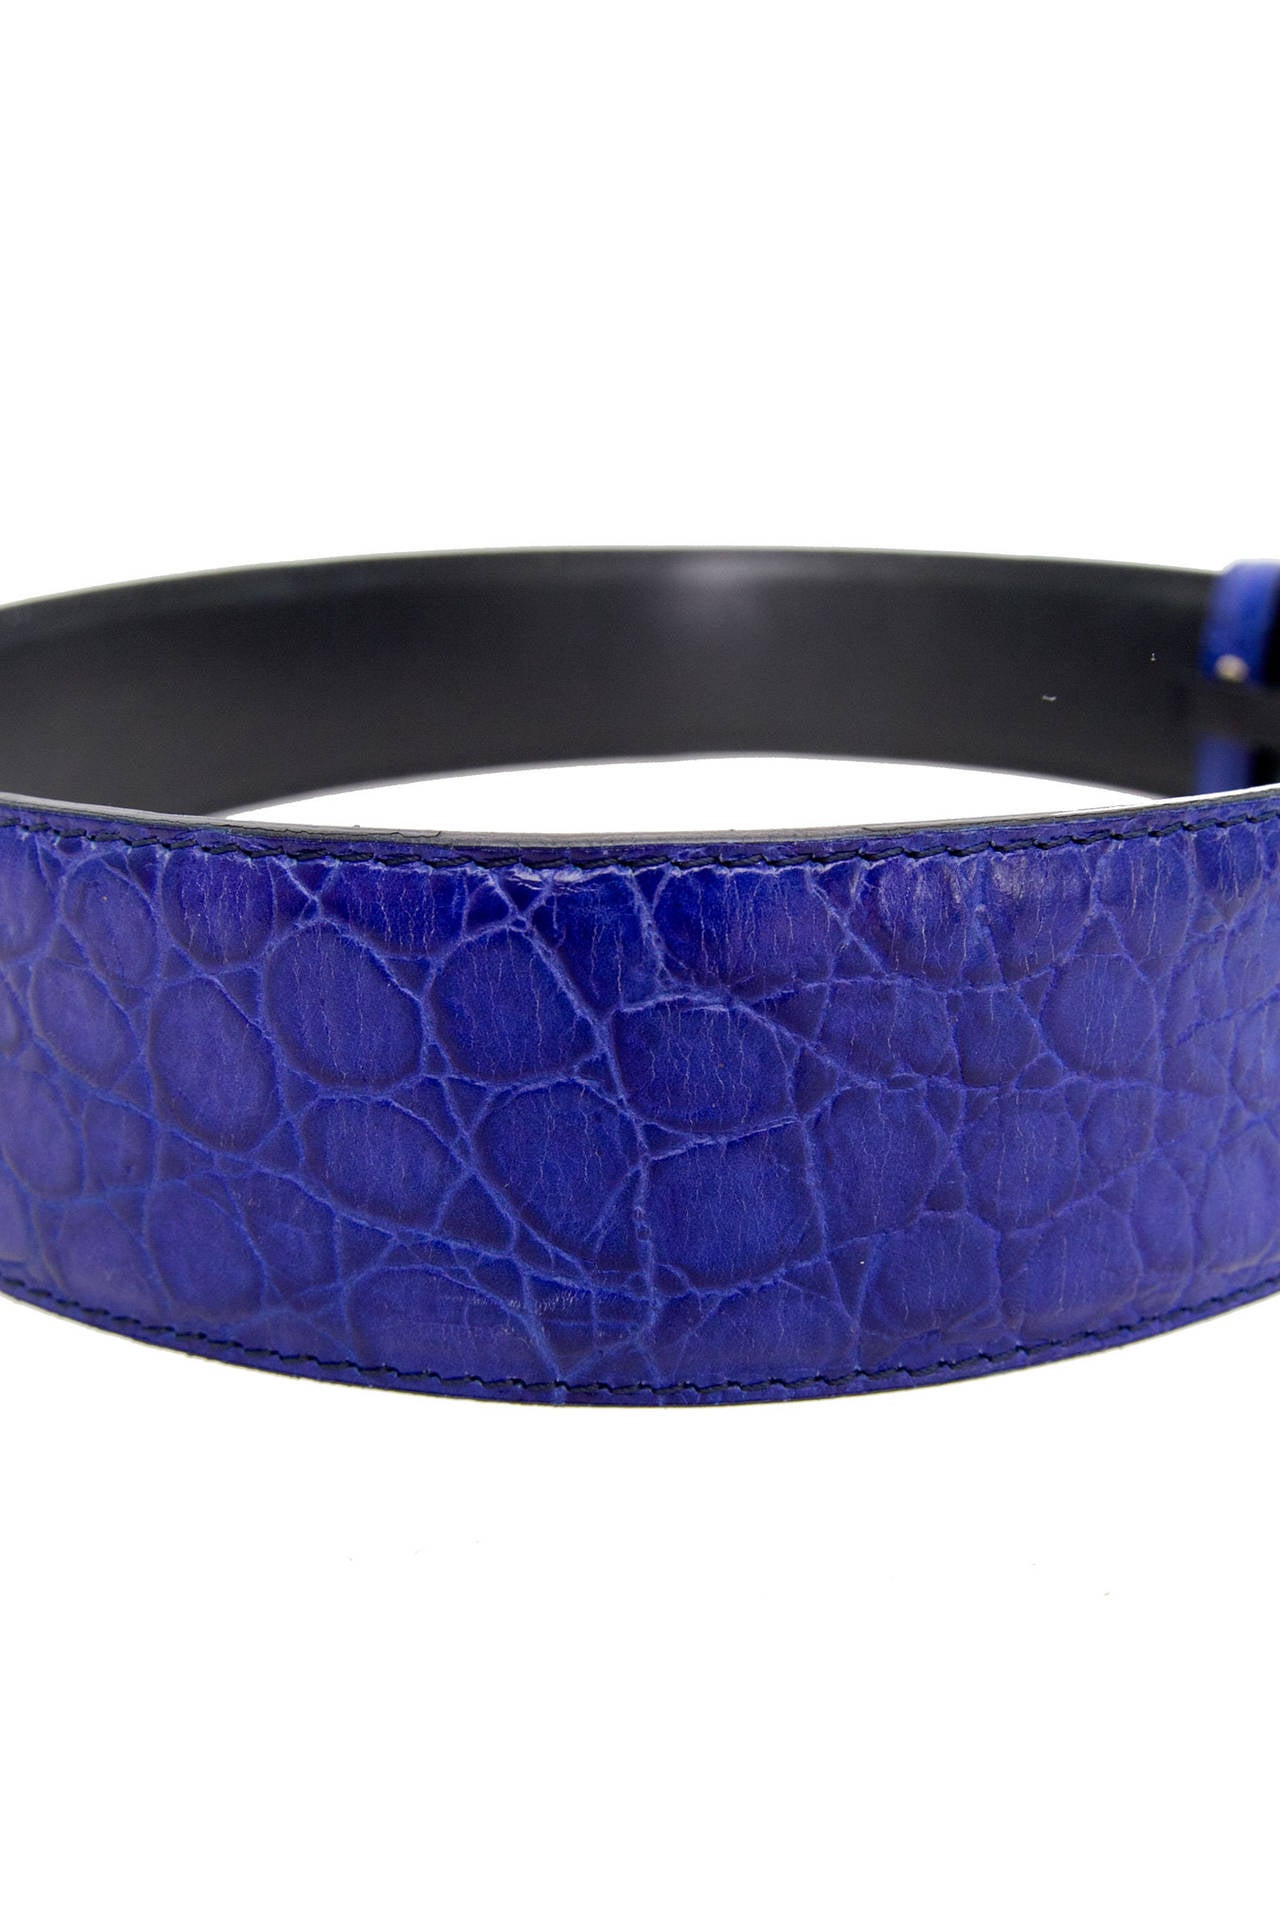 blue and gold versace belt